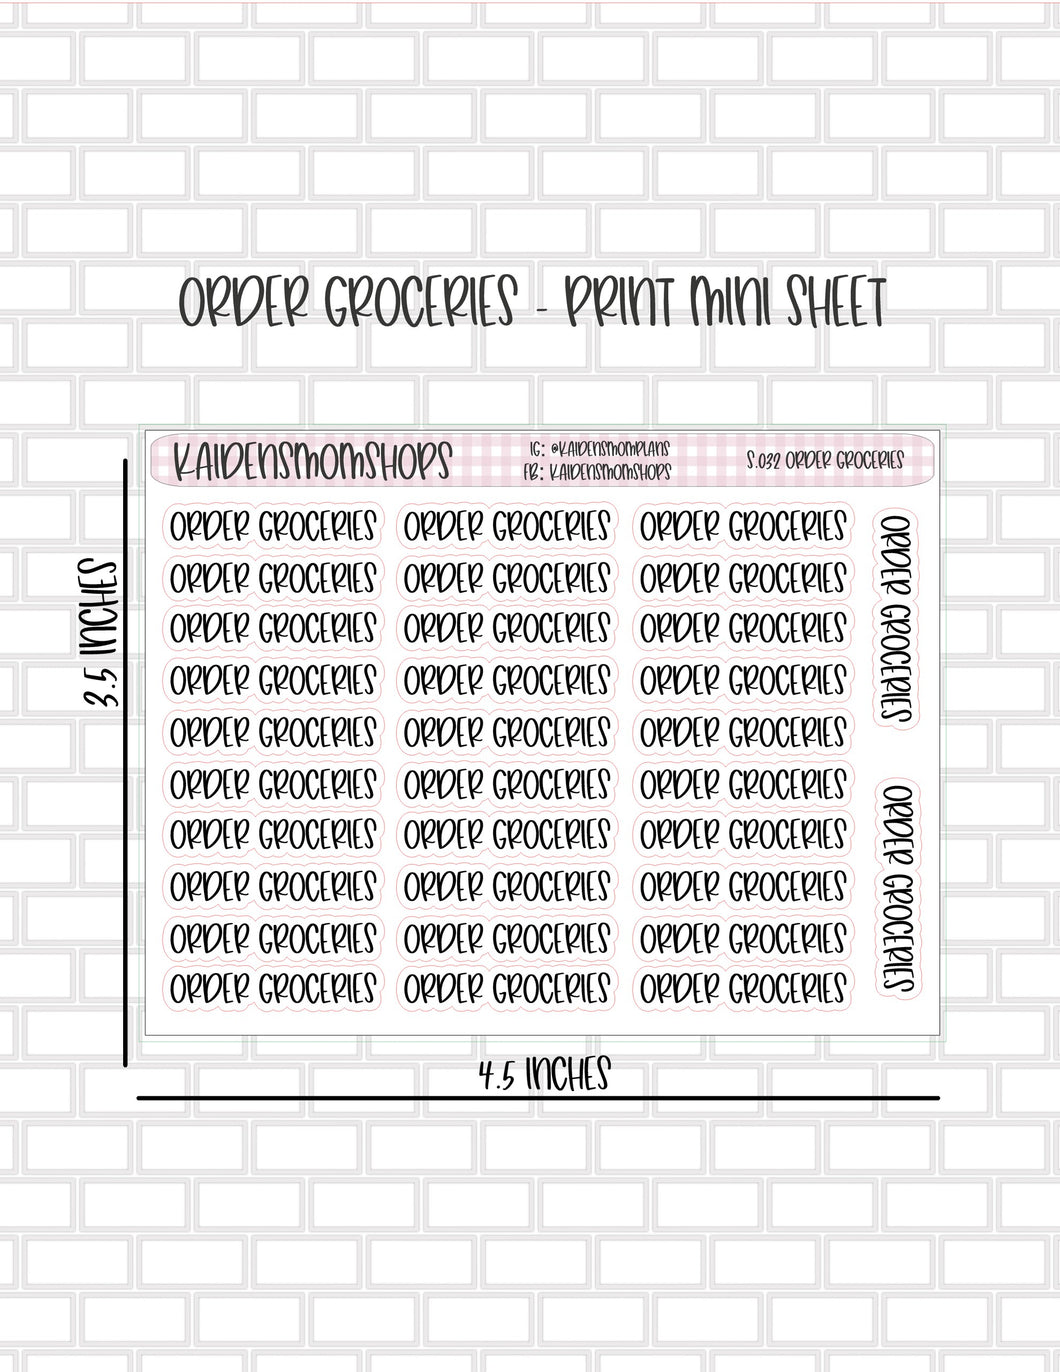 S.032 Order Groceries Mini Sticker Sheet